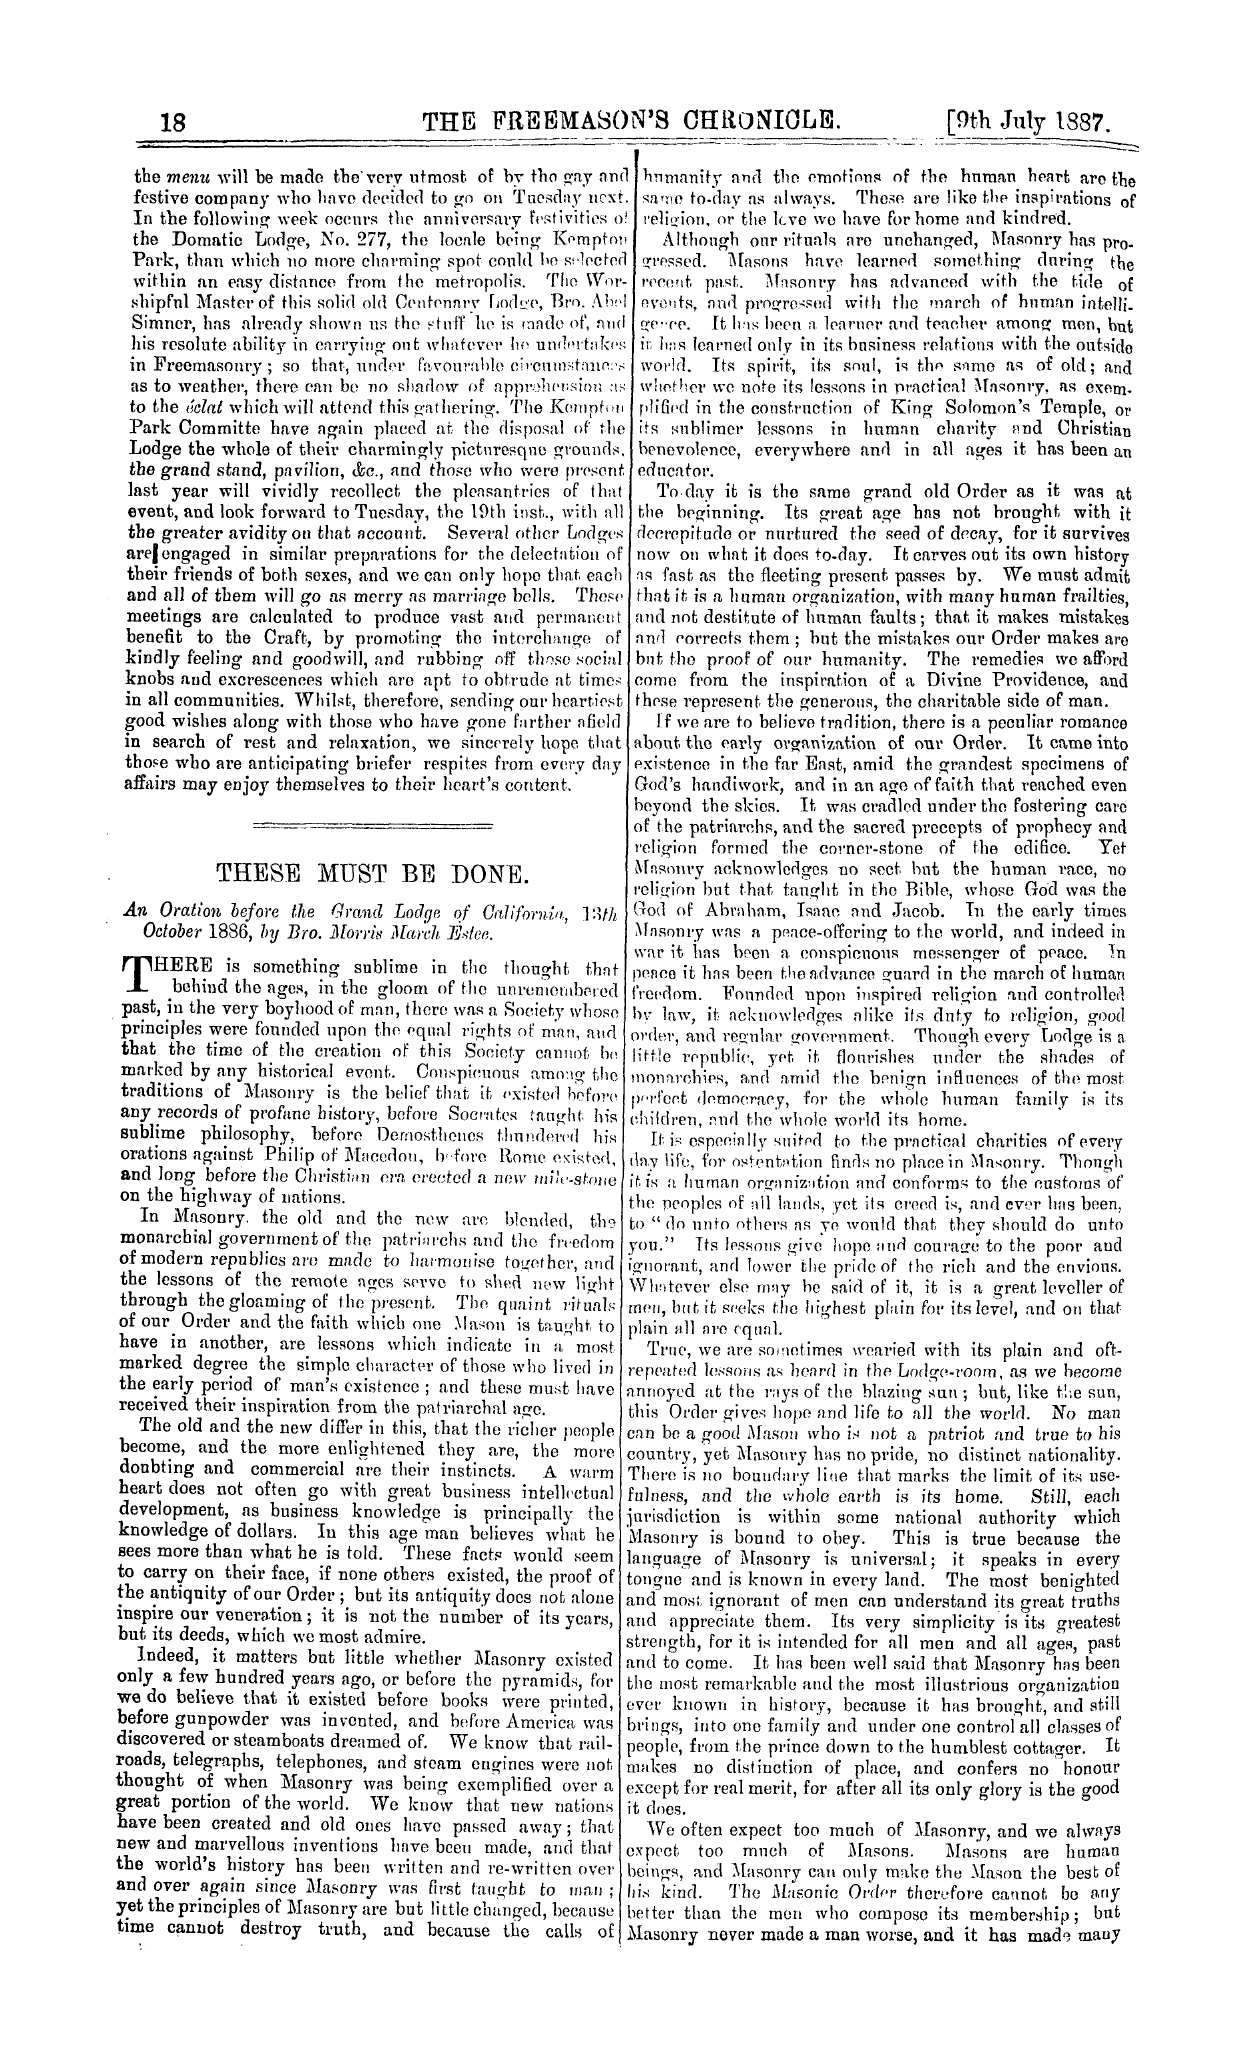 The Freemason's Chronicle: 1887-07-09: 2